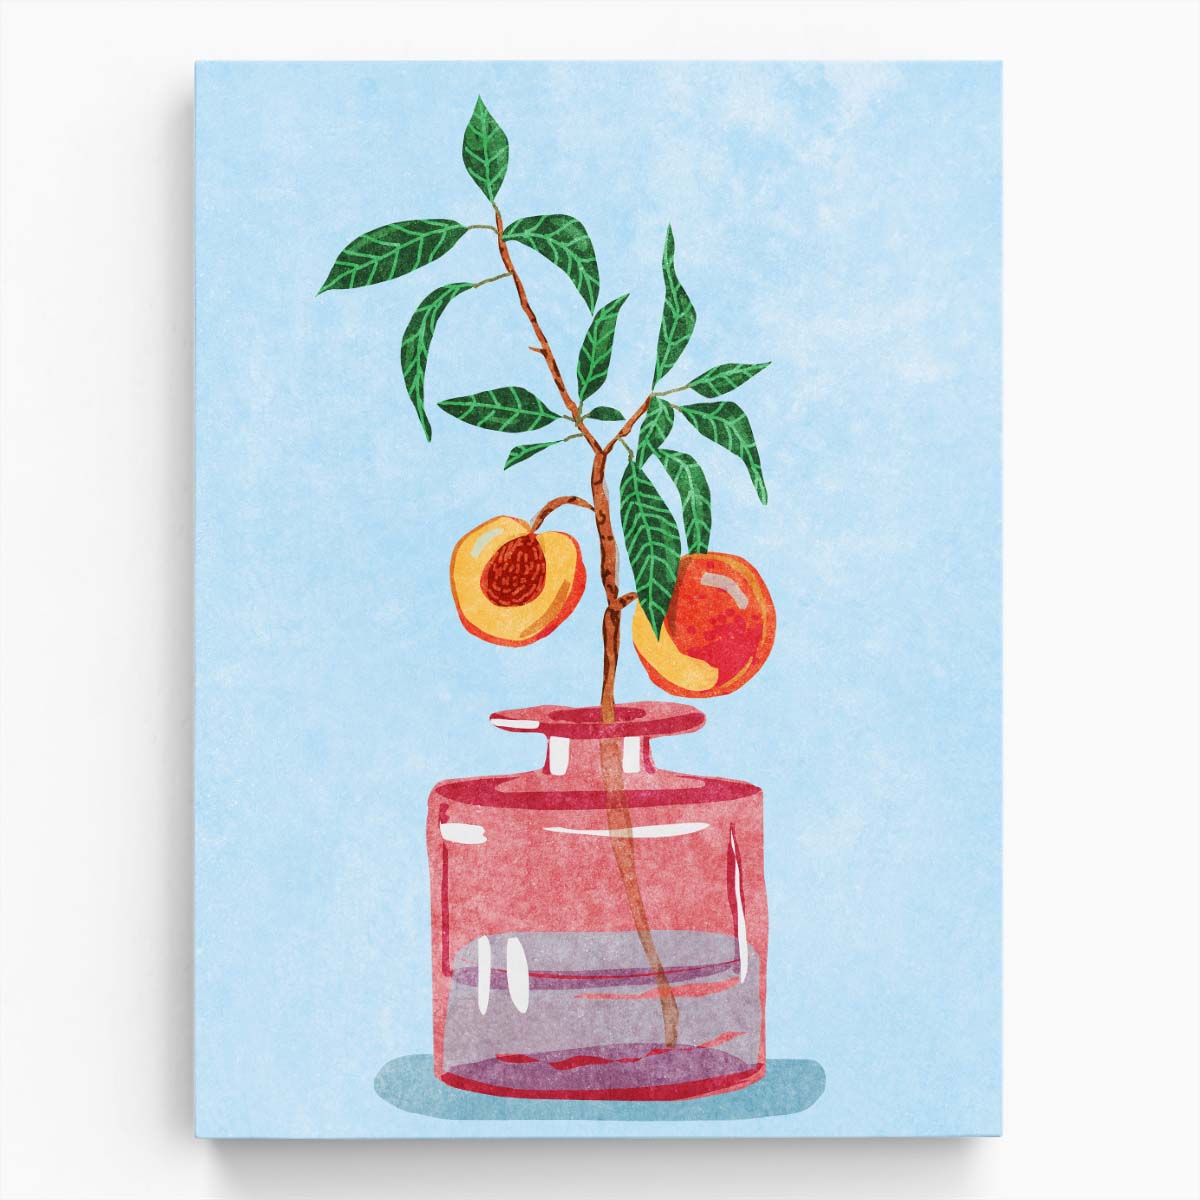 Minimalist Peach Tree Illustration in Vase by Raissa Oltmanns by Luxuriance Designs, made in USA